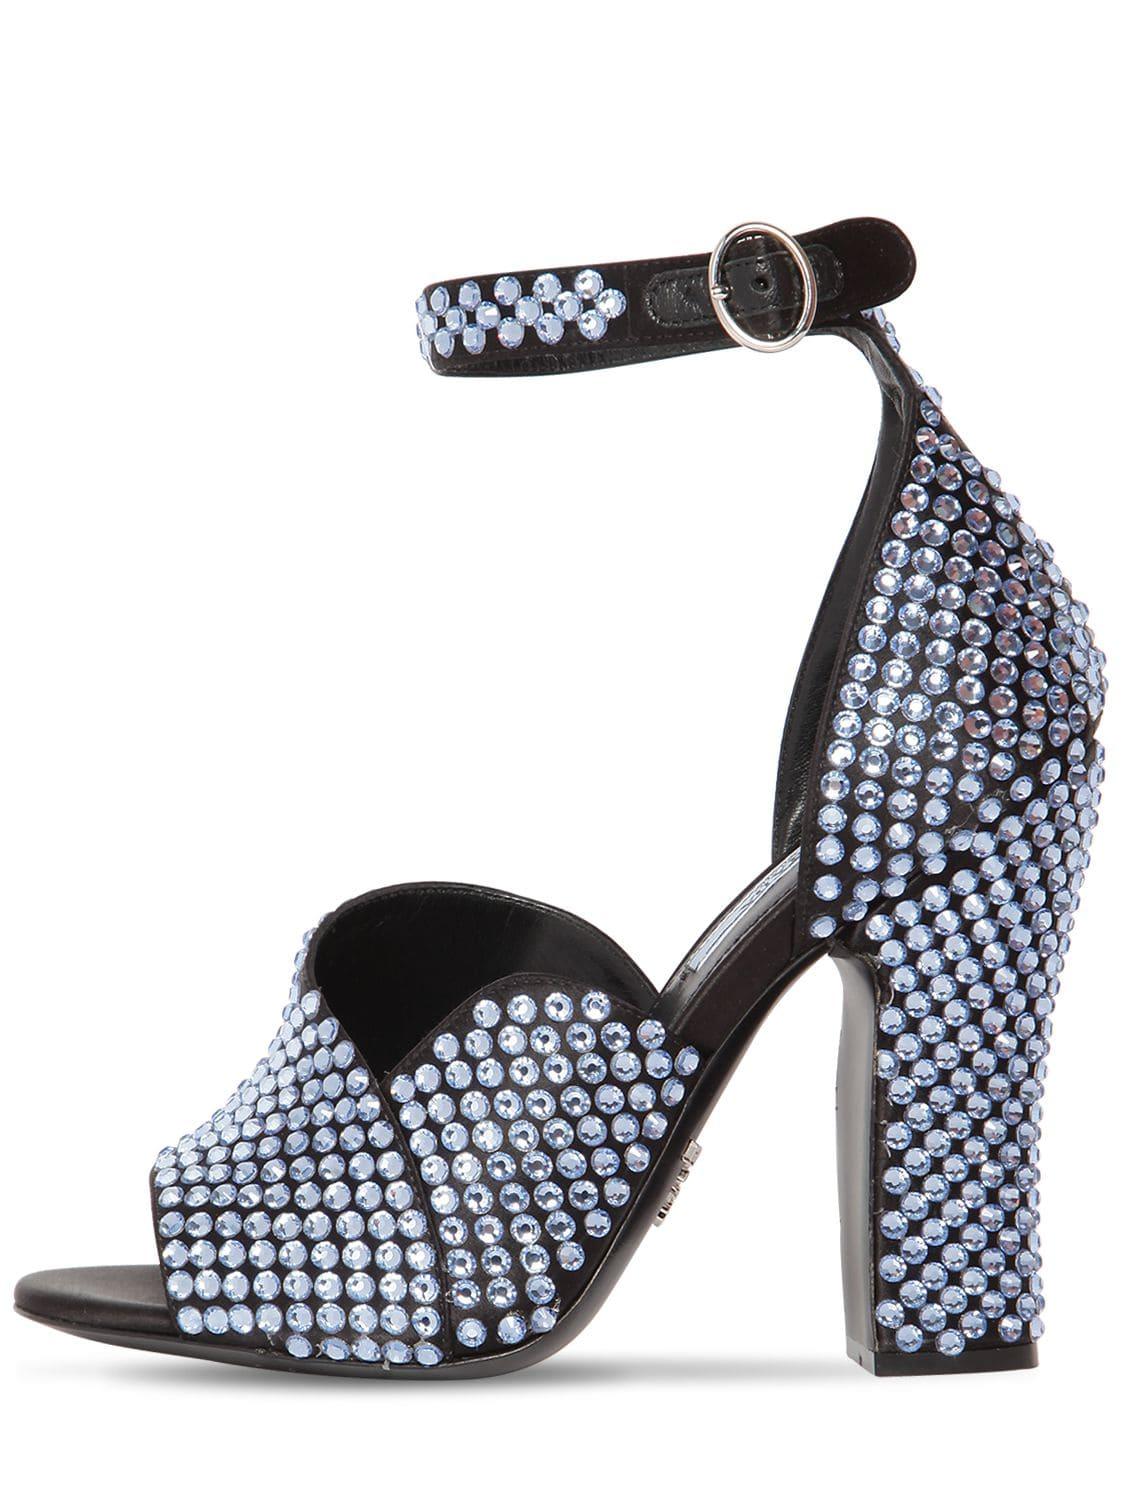 Prada Crystal-embellished Satin Sandals in Blue | Lyst